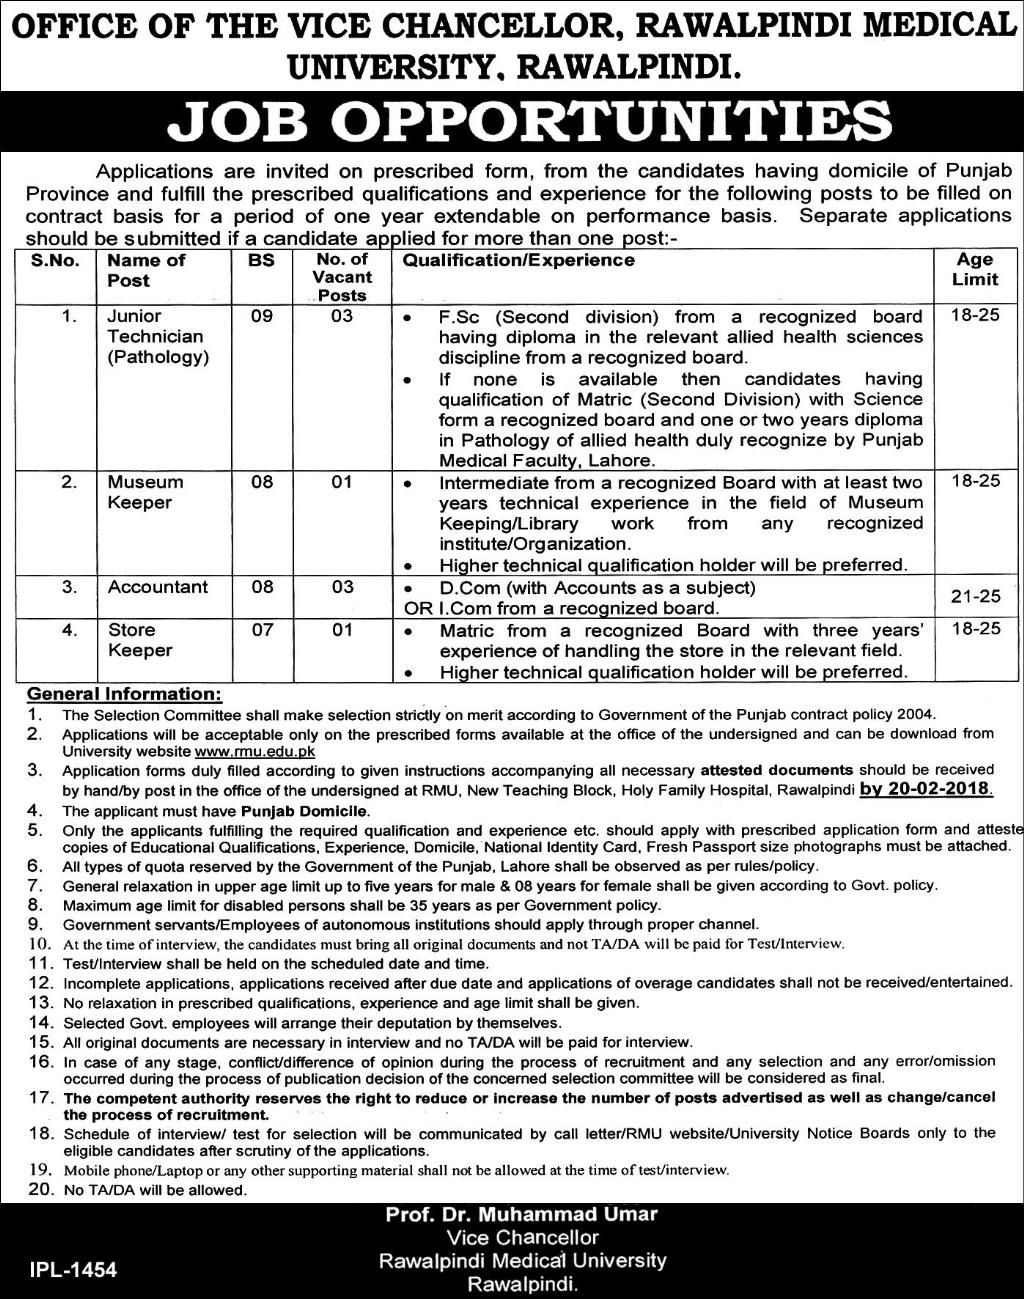 Jobs in Rawalpindi Medical University 02 Feb 2018